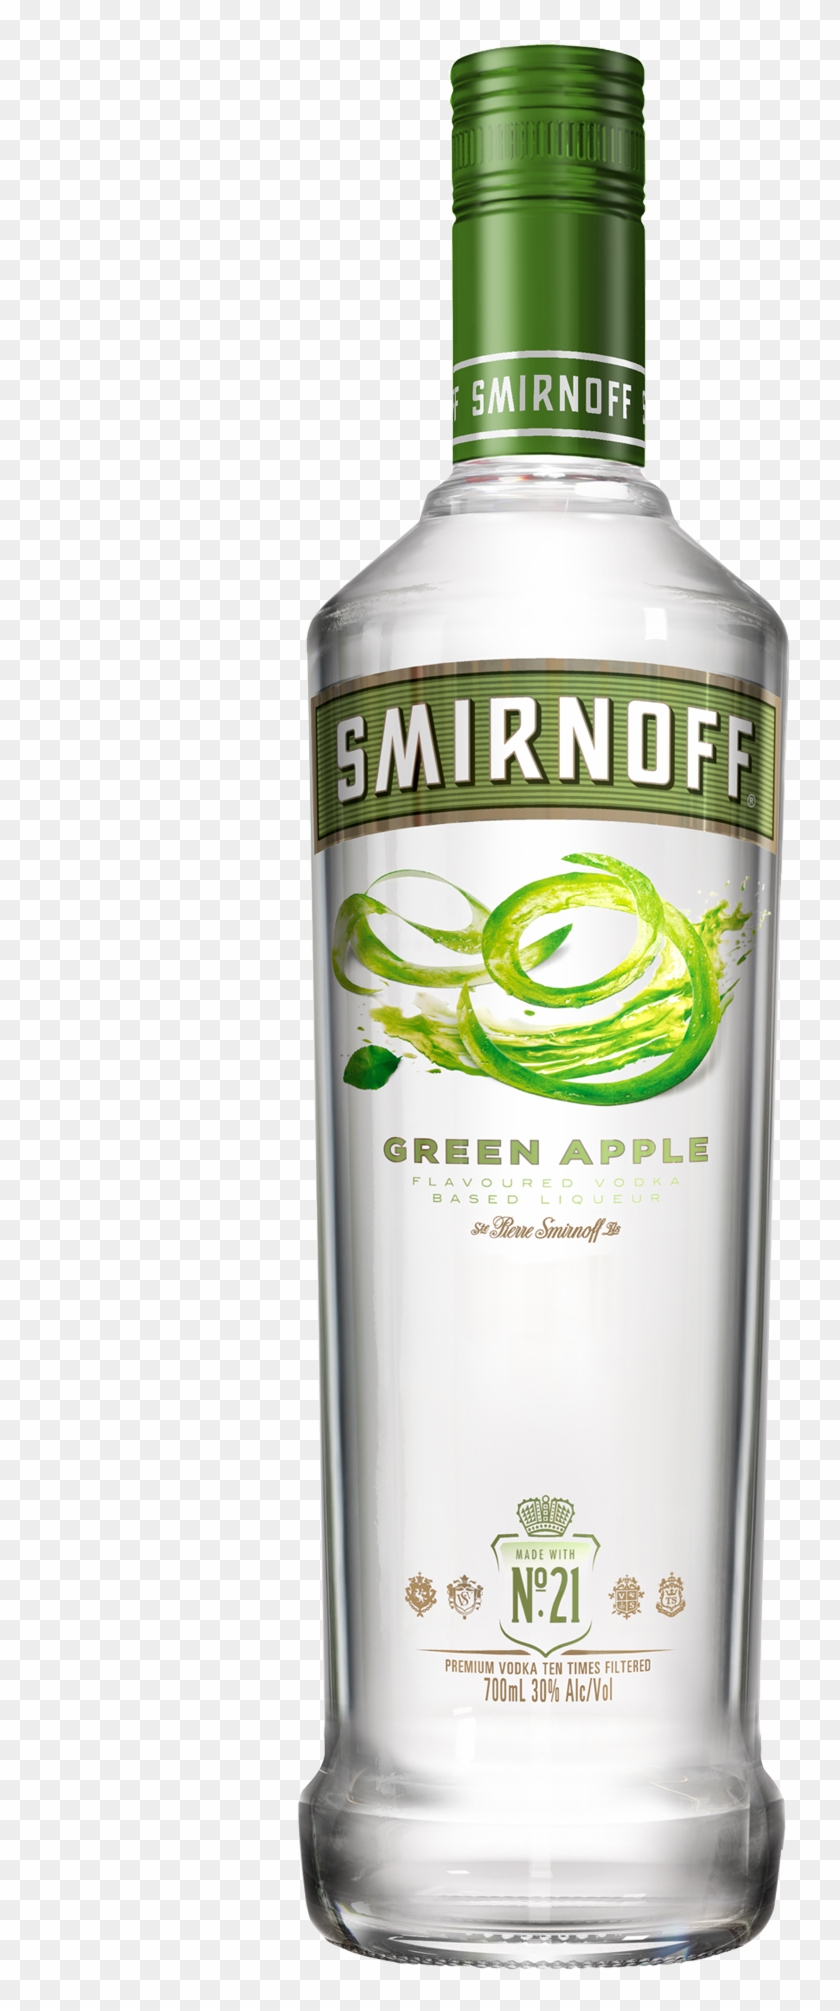 Smirnoff Green Apple Vodka 700ml - Smirnoff Green Apple 0 70 Clipart #1778866